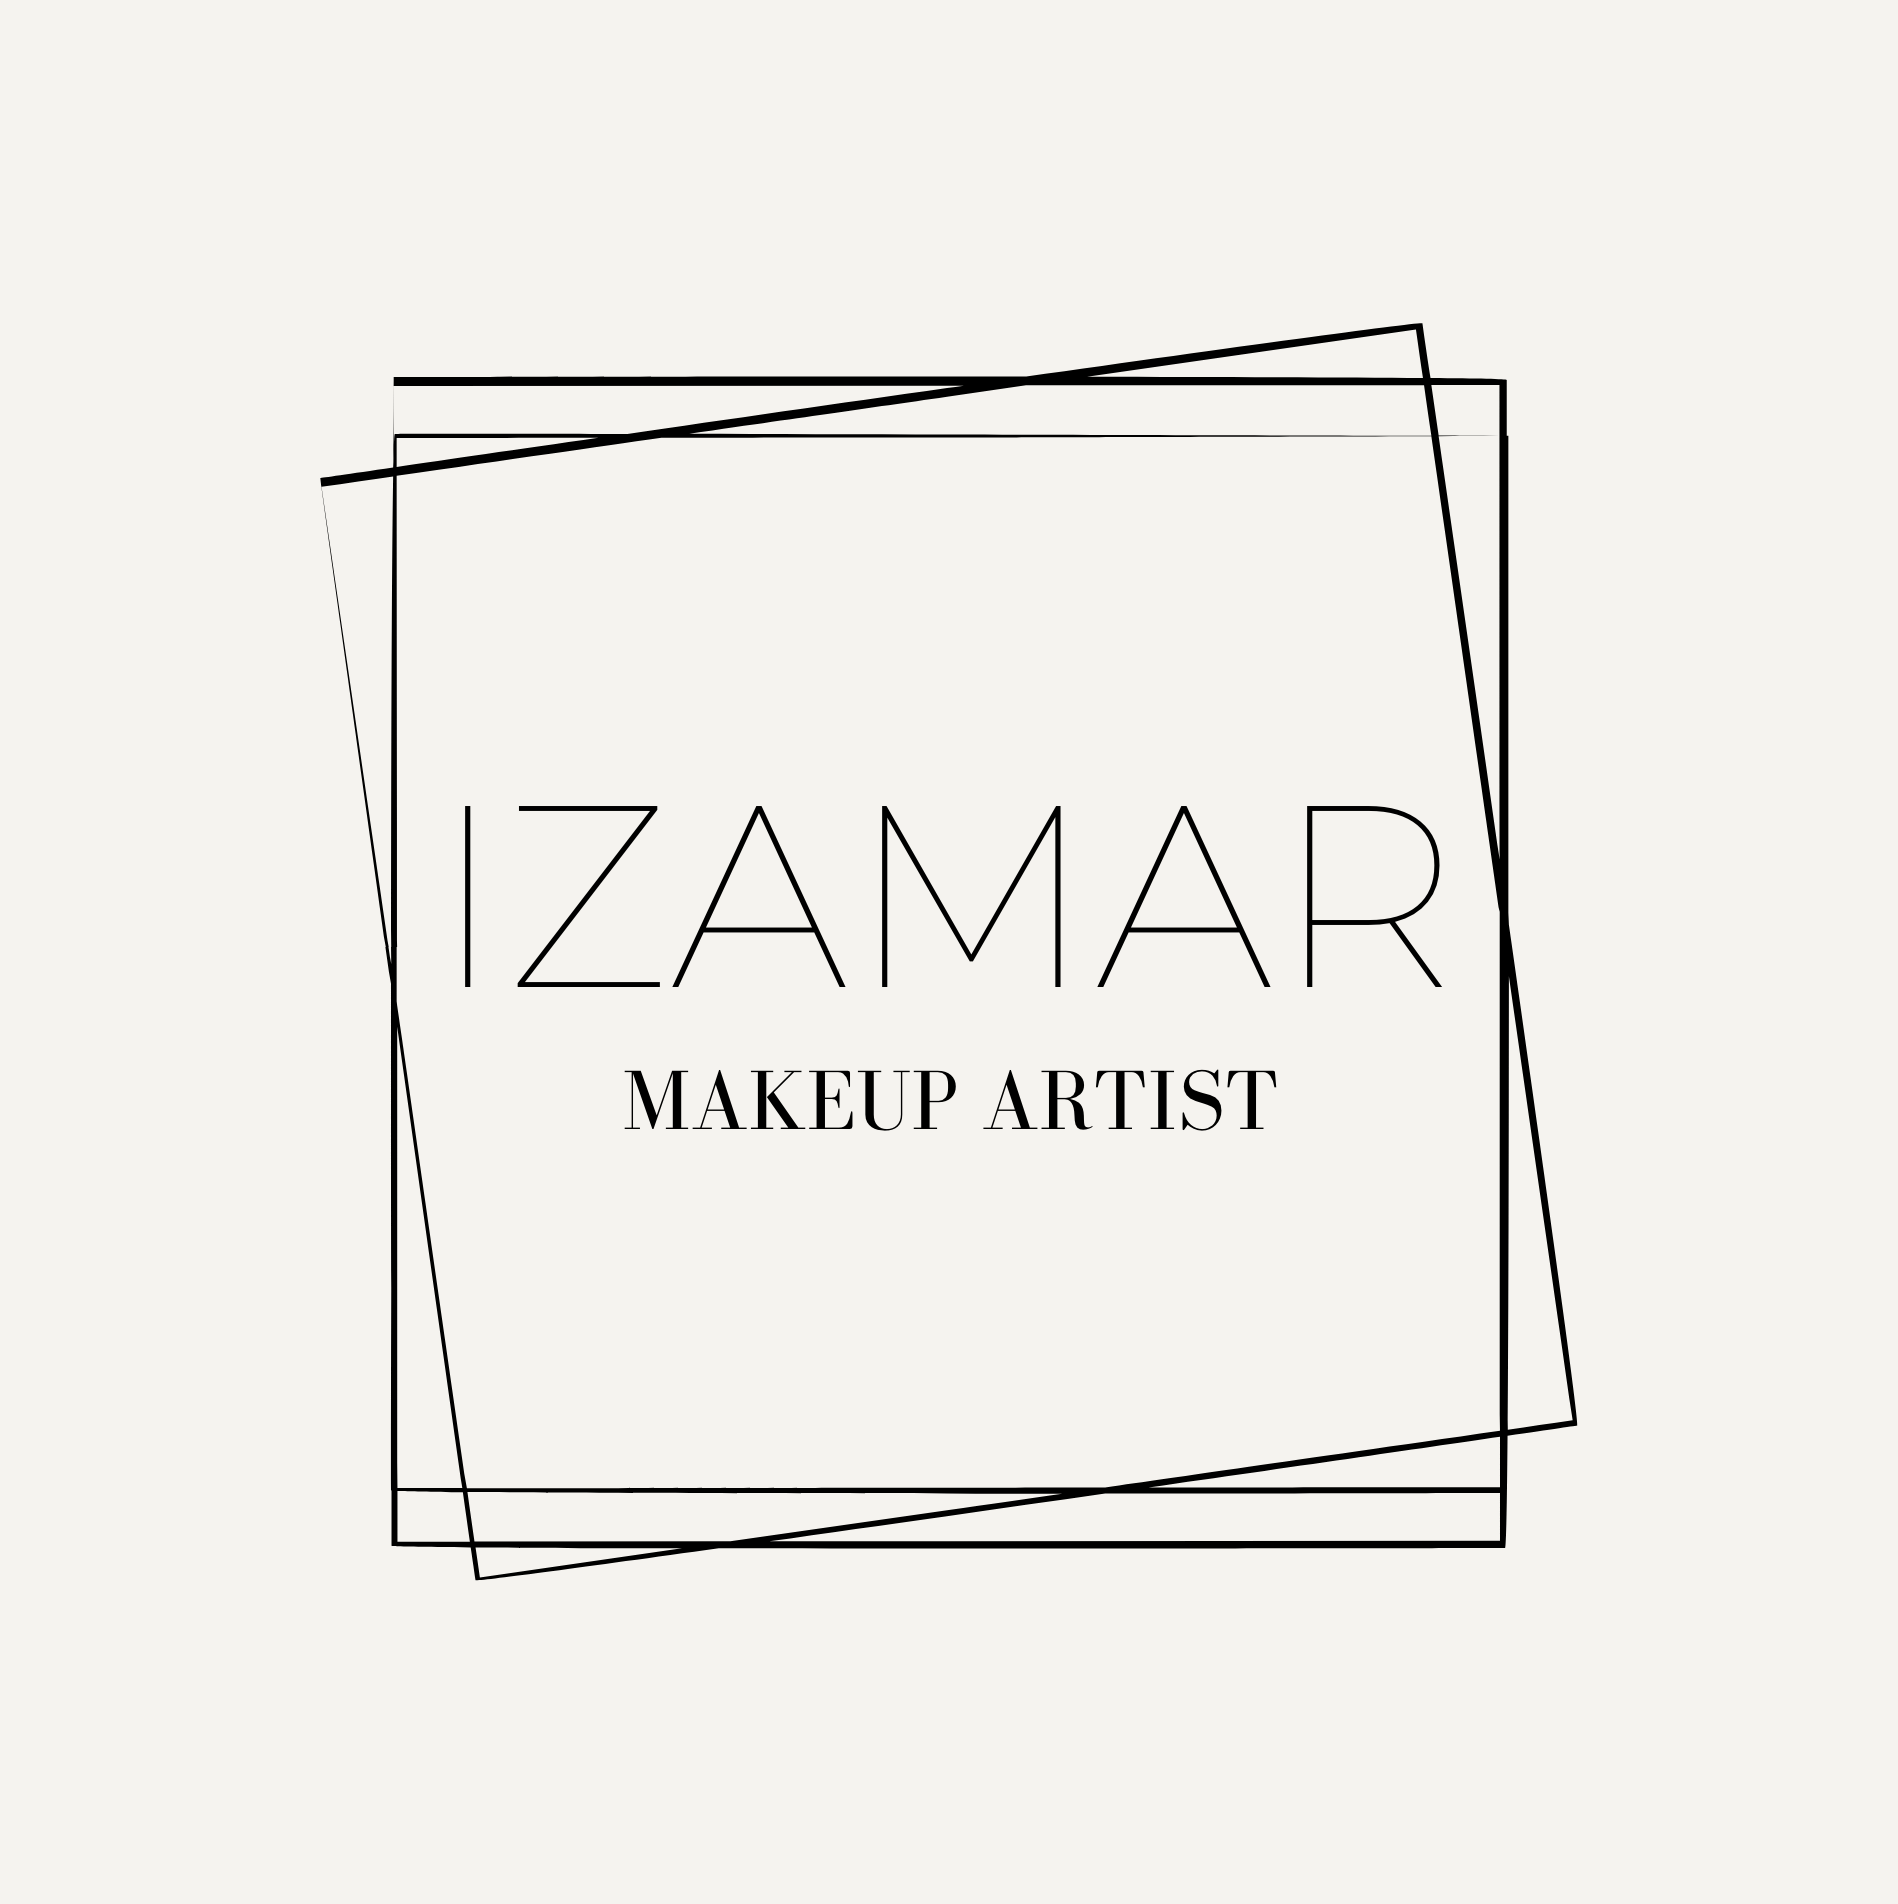 Izamar Store - Izamar Store added a new photo.